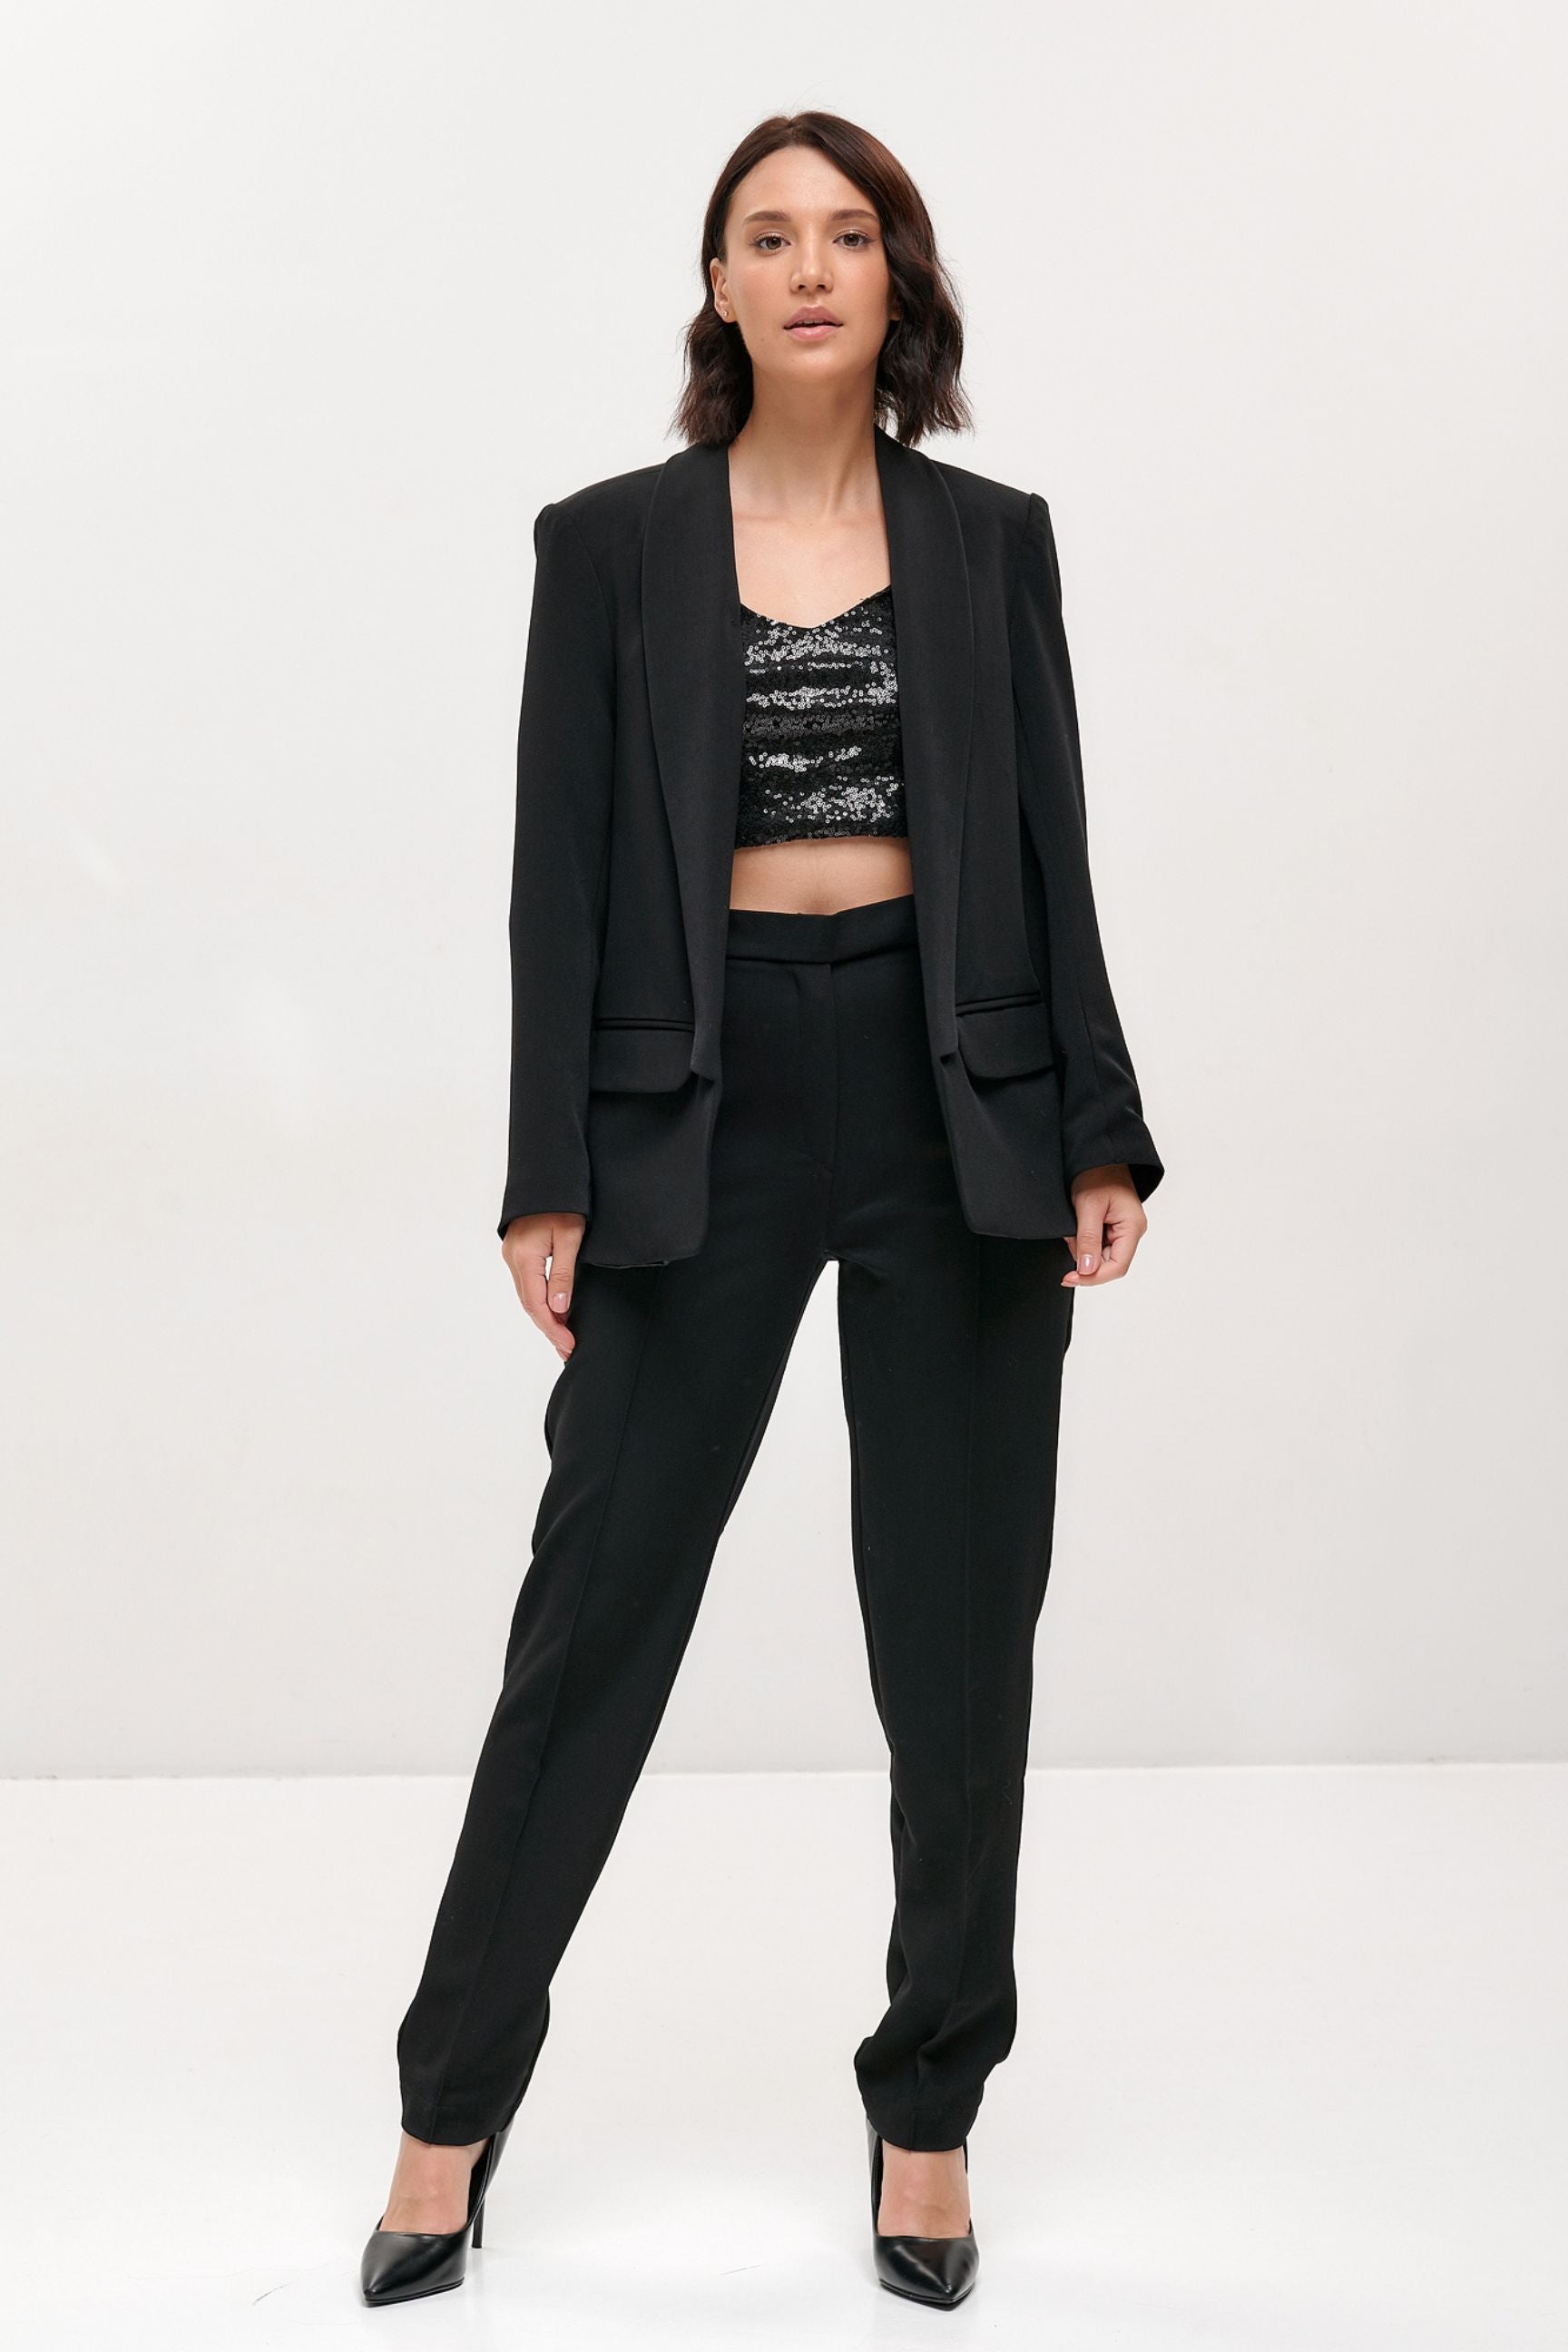 Black Formal Suit for Women, Open Front Blazer & Trousers Suit, Business Suit without Buttons